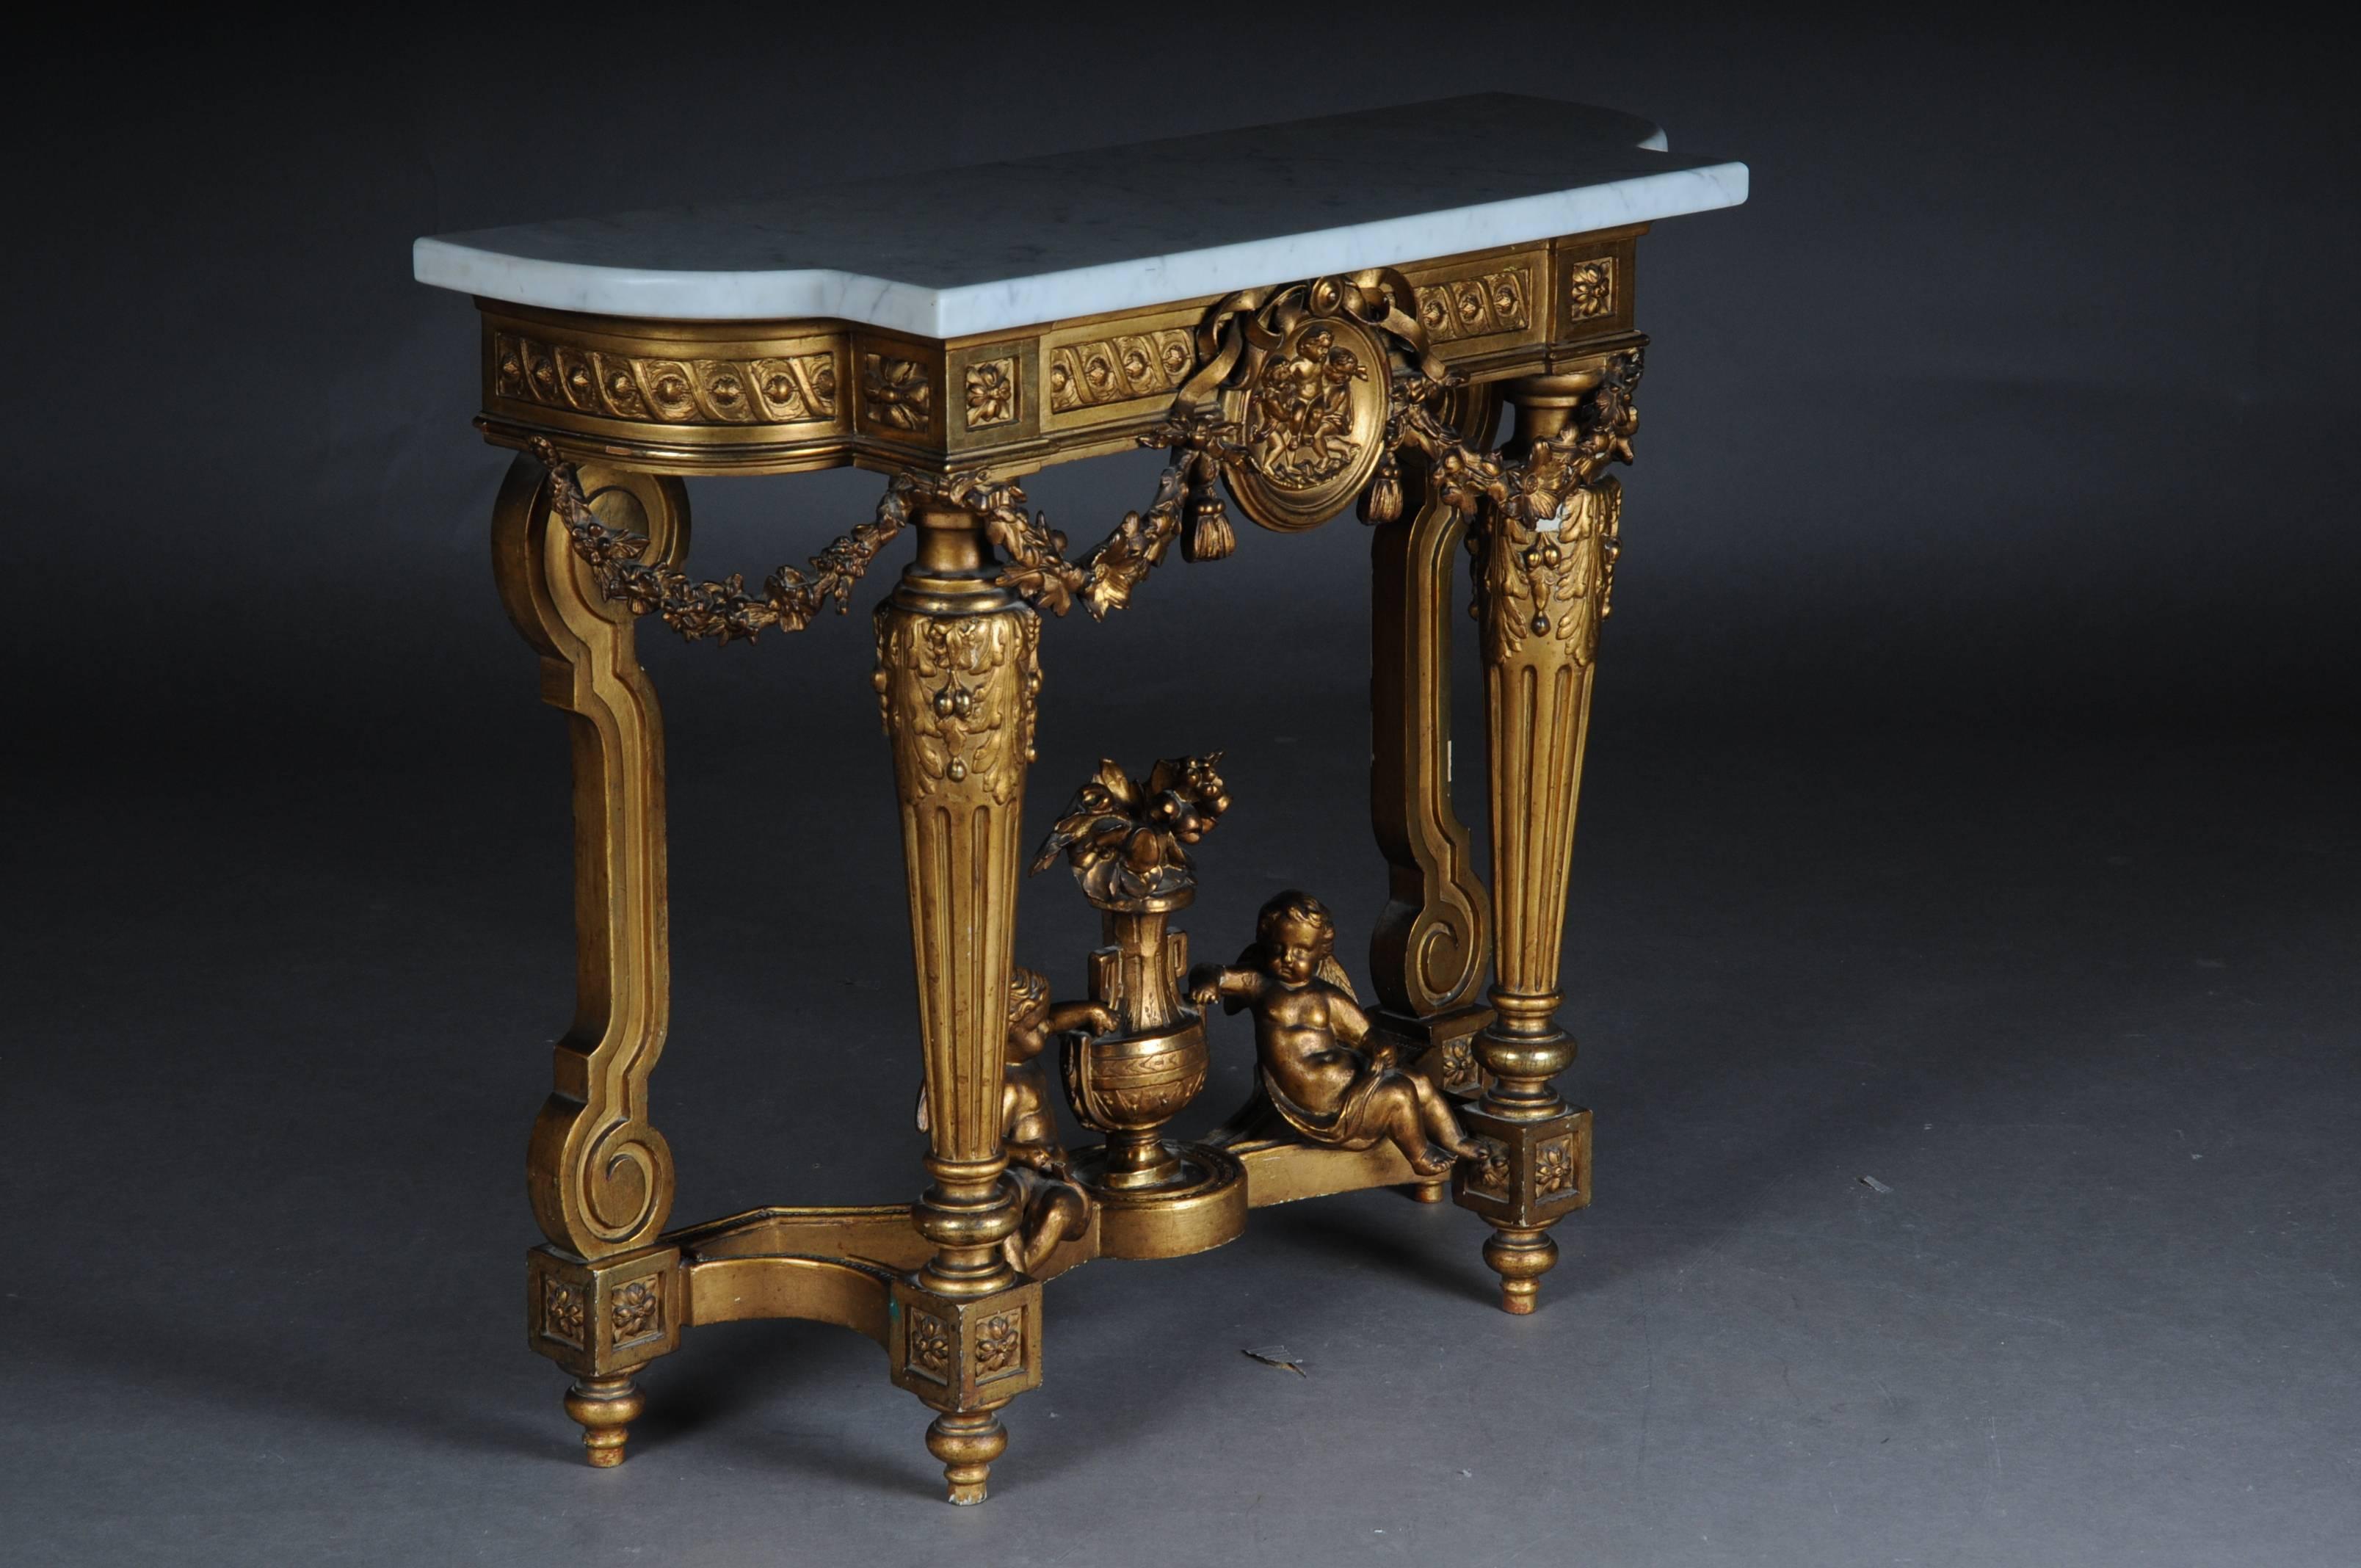 Antique French Splendor Console Table, circa 1860 (Französisch)